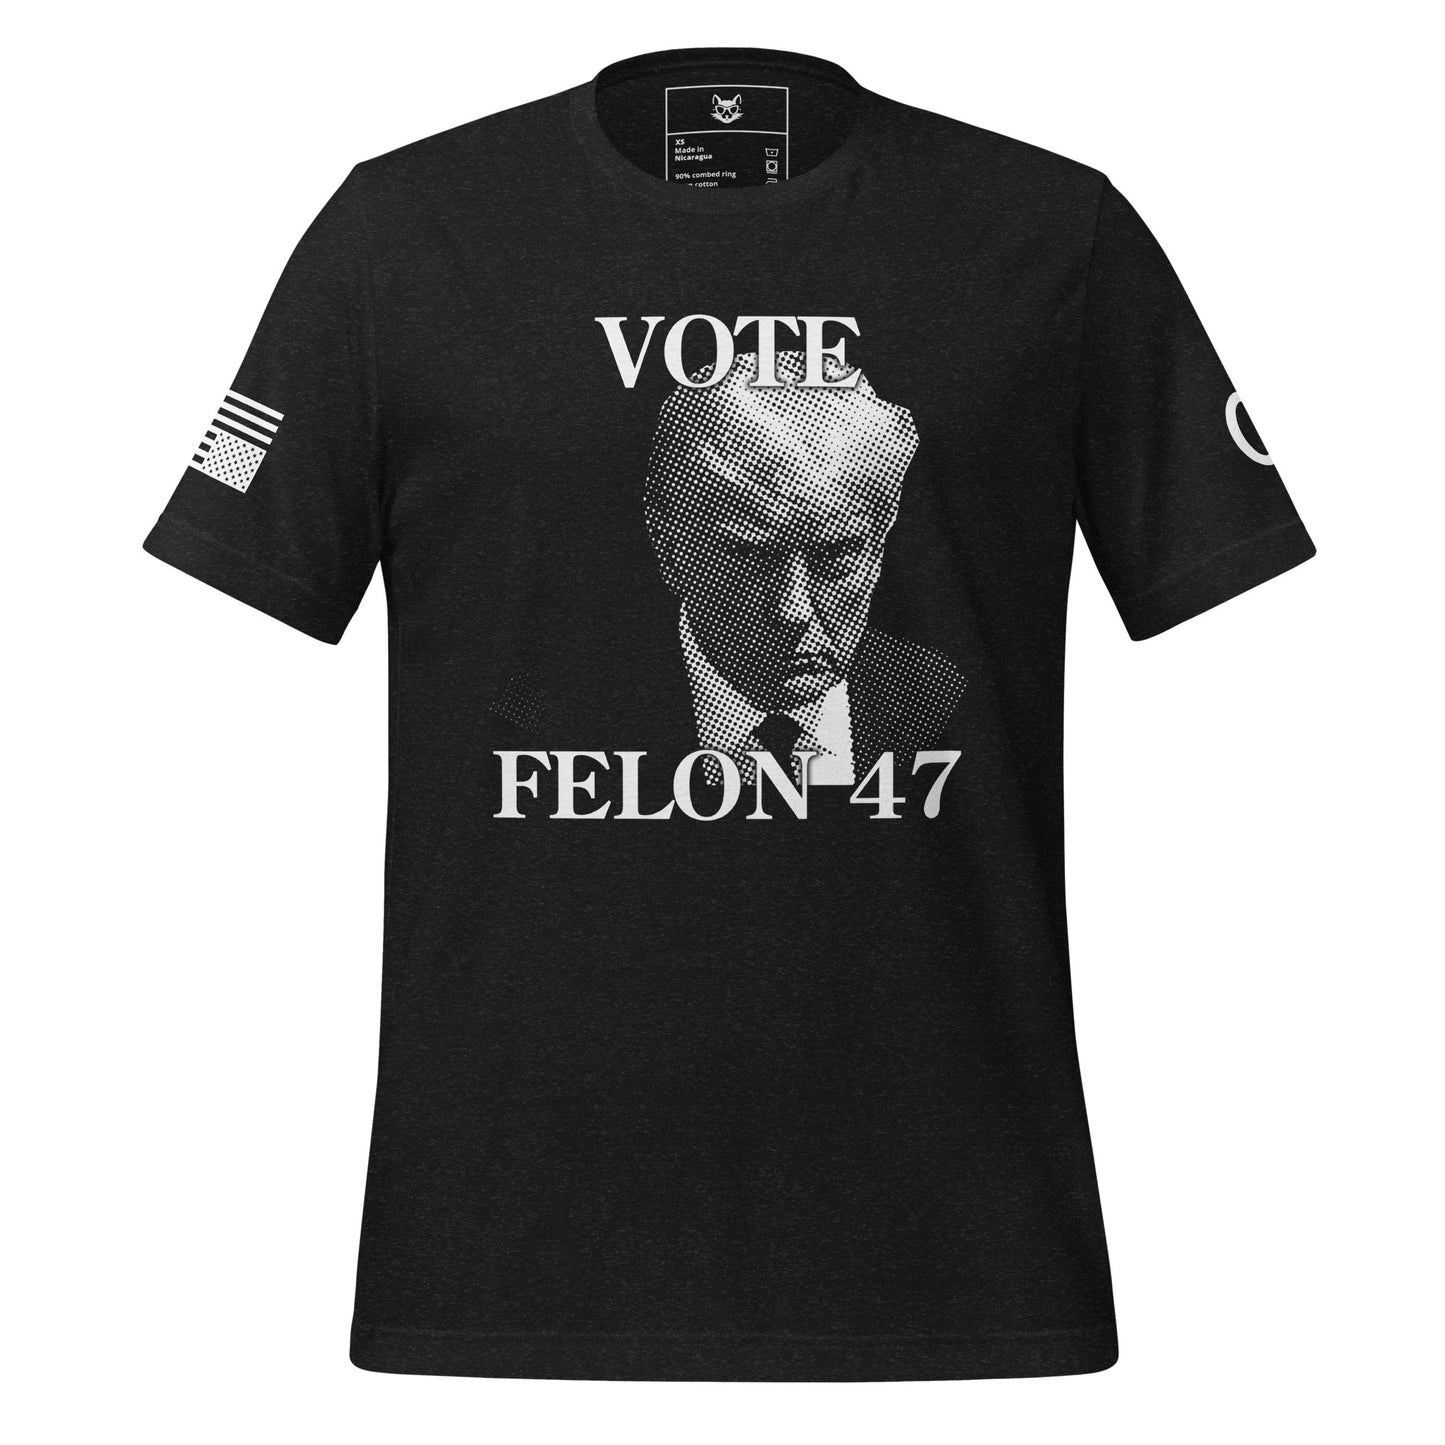 Women's "VOTE FELON 47" T-shirt